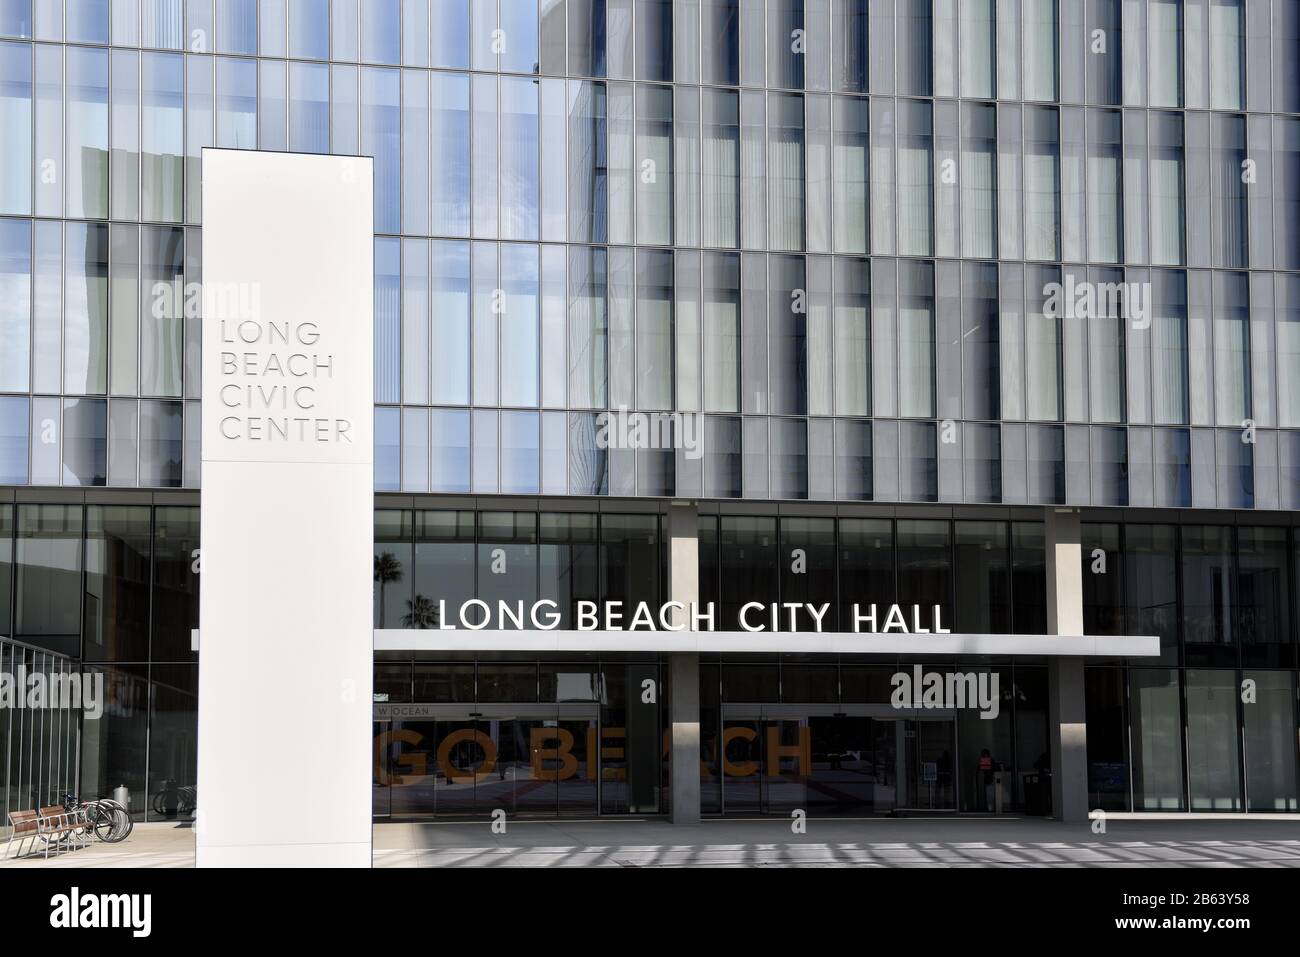 LONG BEACH, CALIFORNIA - 06 MAR 2020: Long Beach City Hall at the Civic Center. Stock Photo